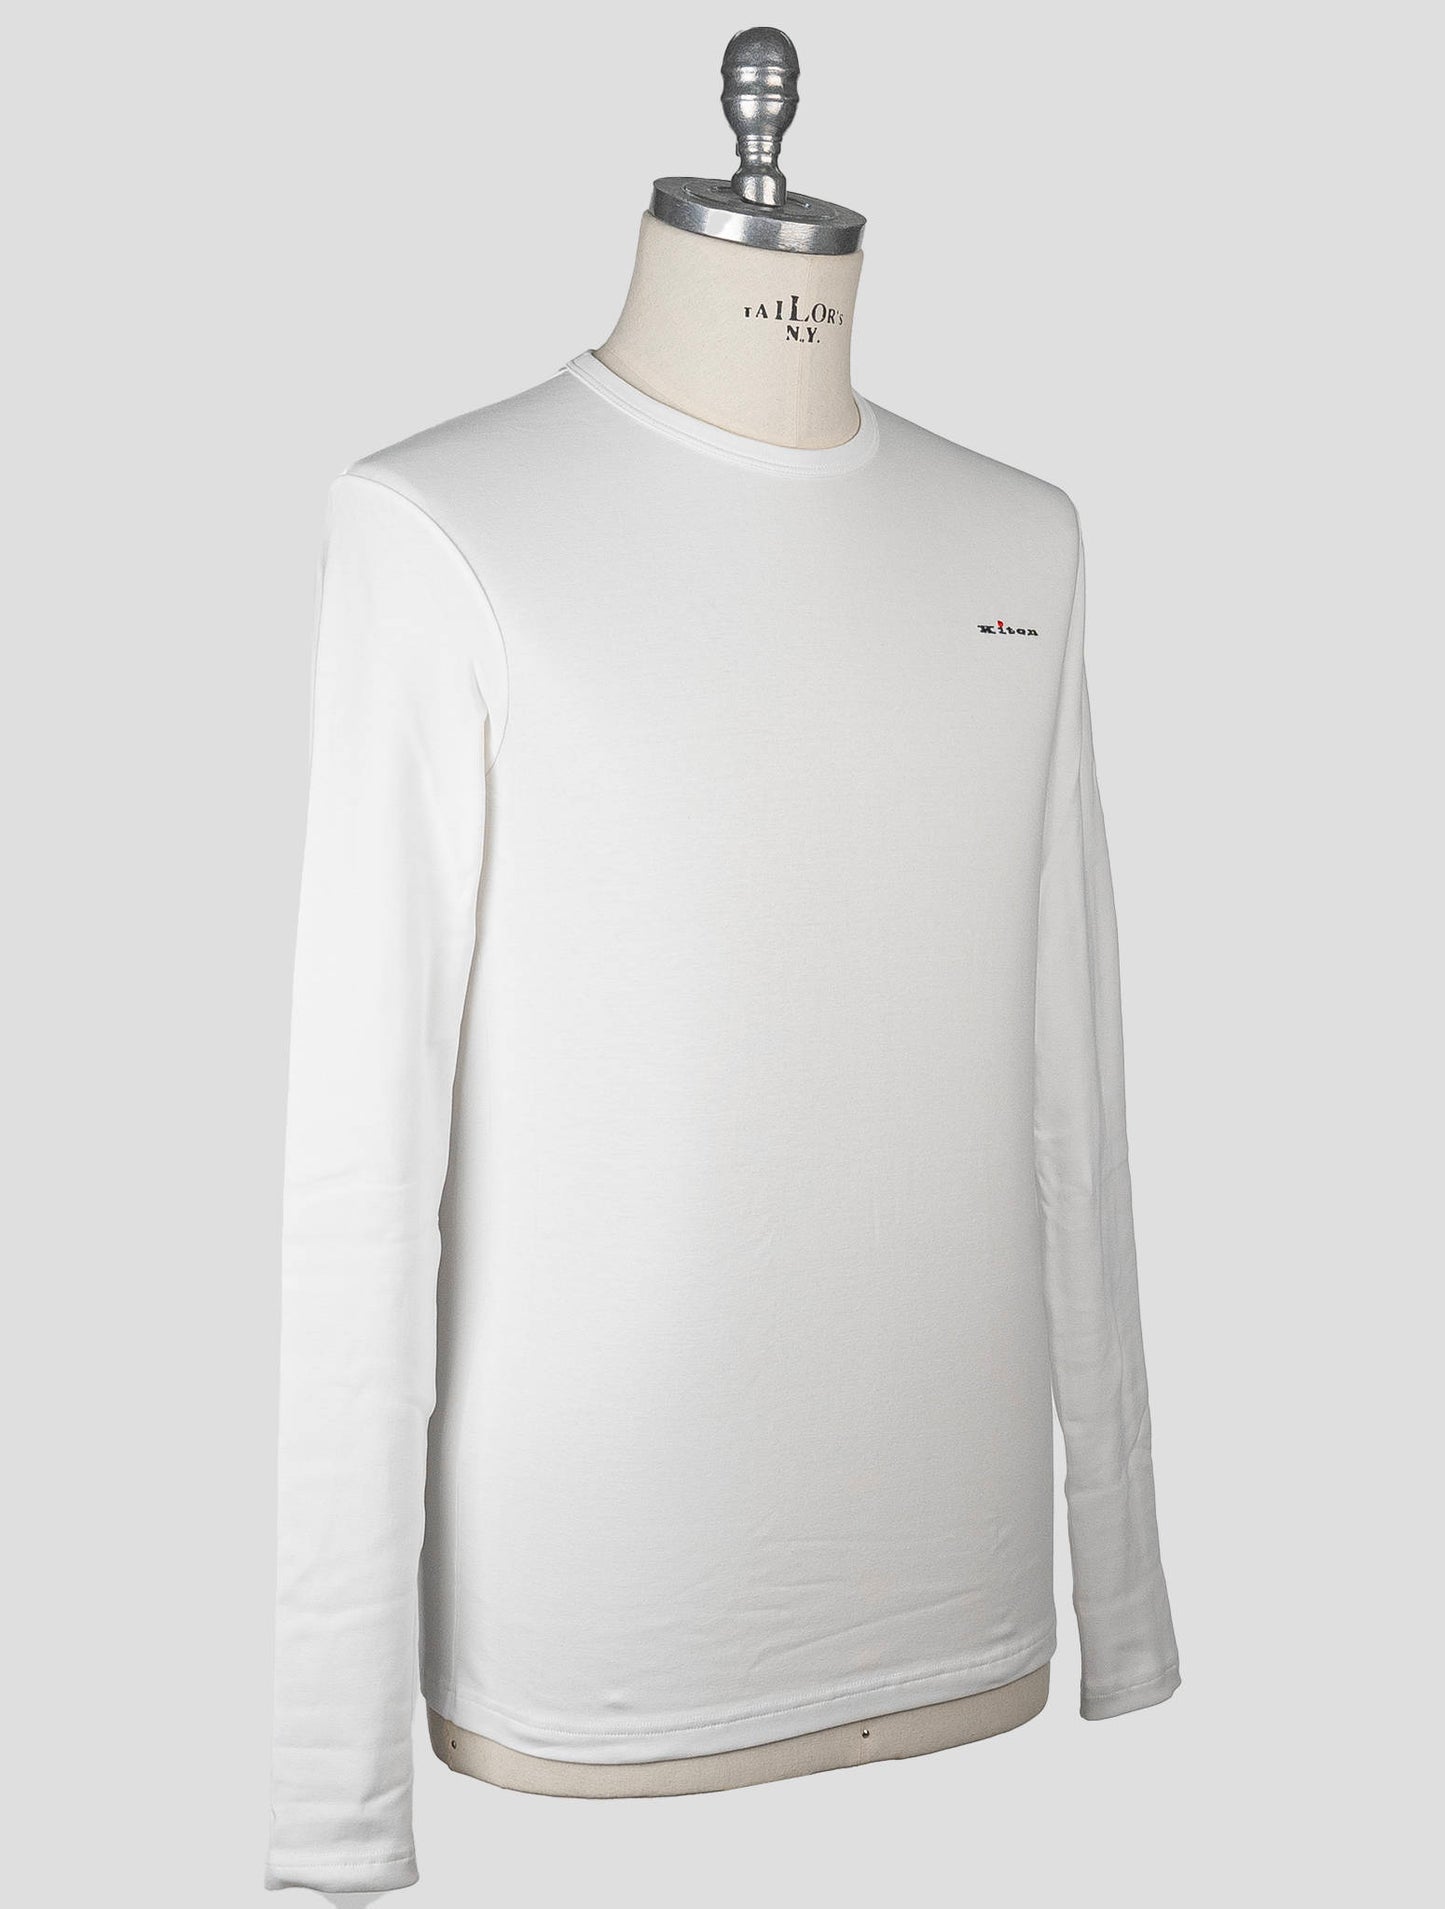 Kiton White Cotton Ea T-Shirt Underwear Long Sleeve